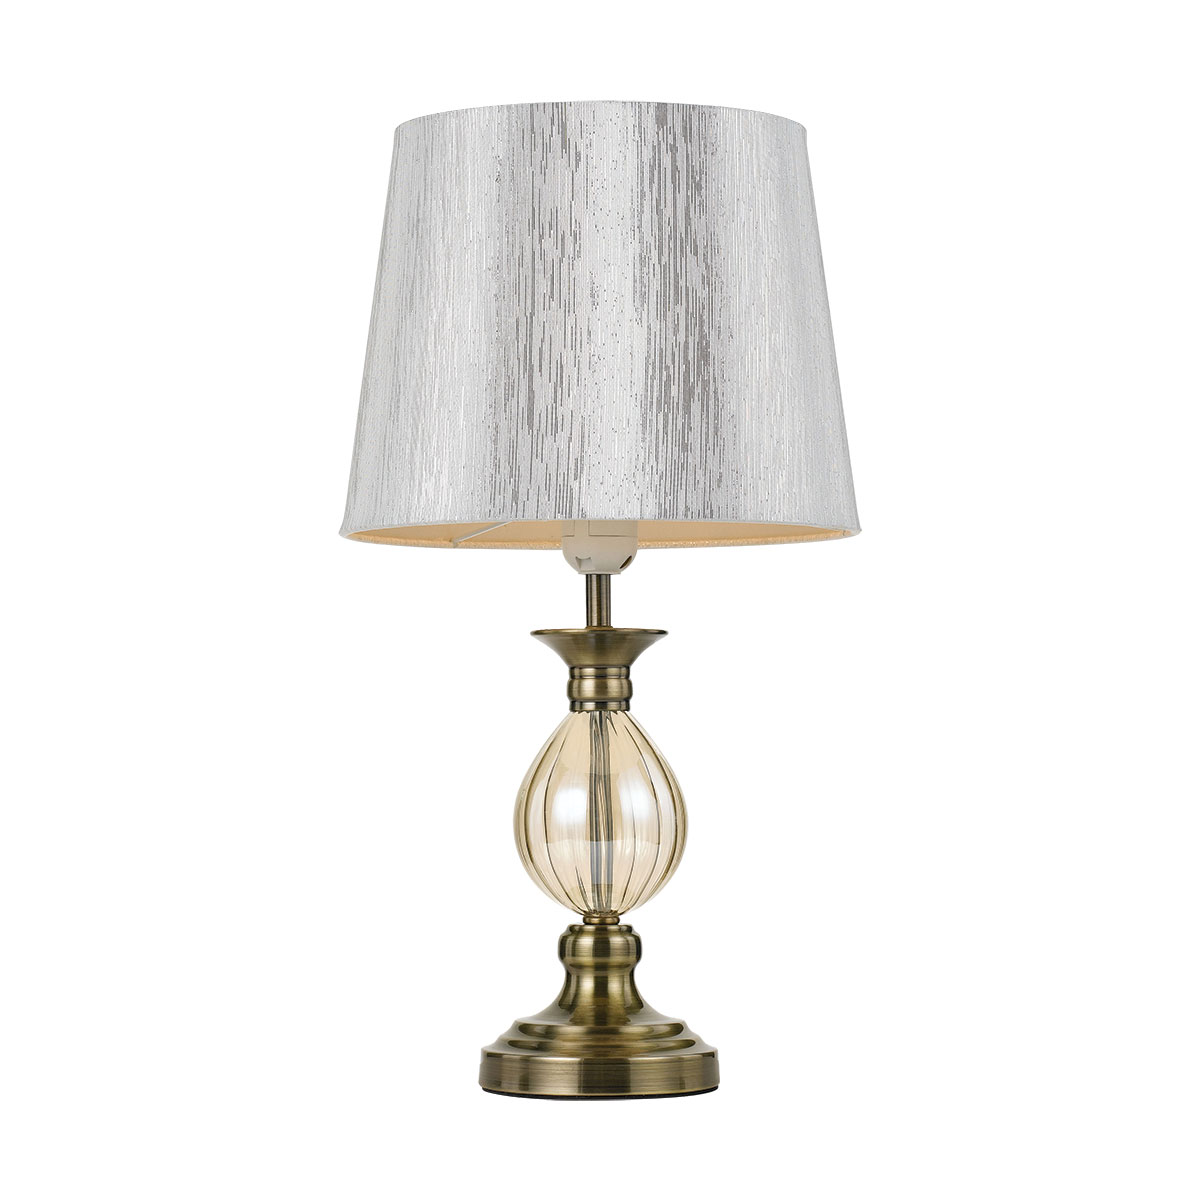 Crest 1 Light Table Lamp Antique Brass, Antique Double Light Table Lamp White